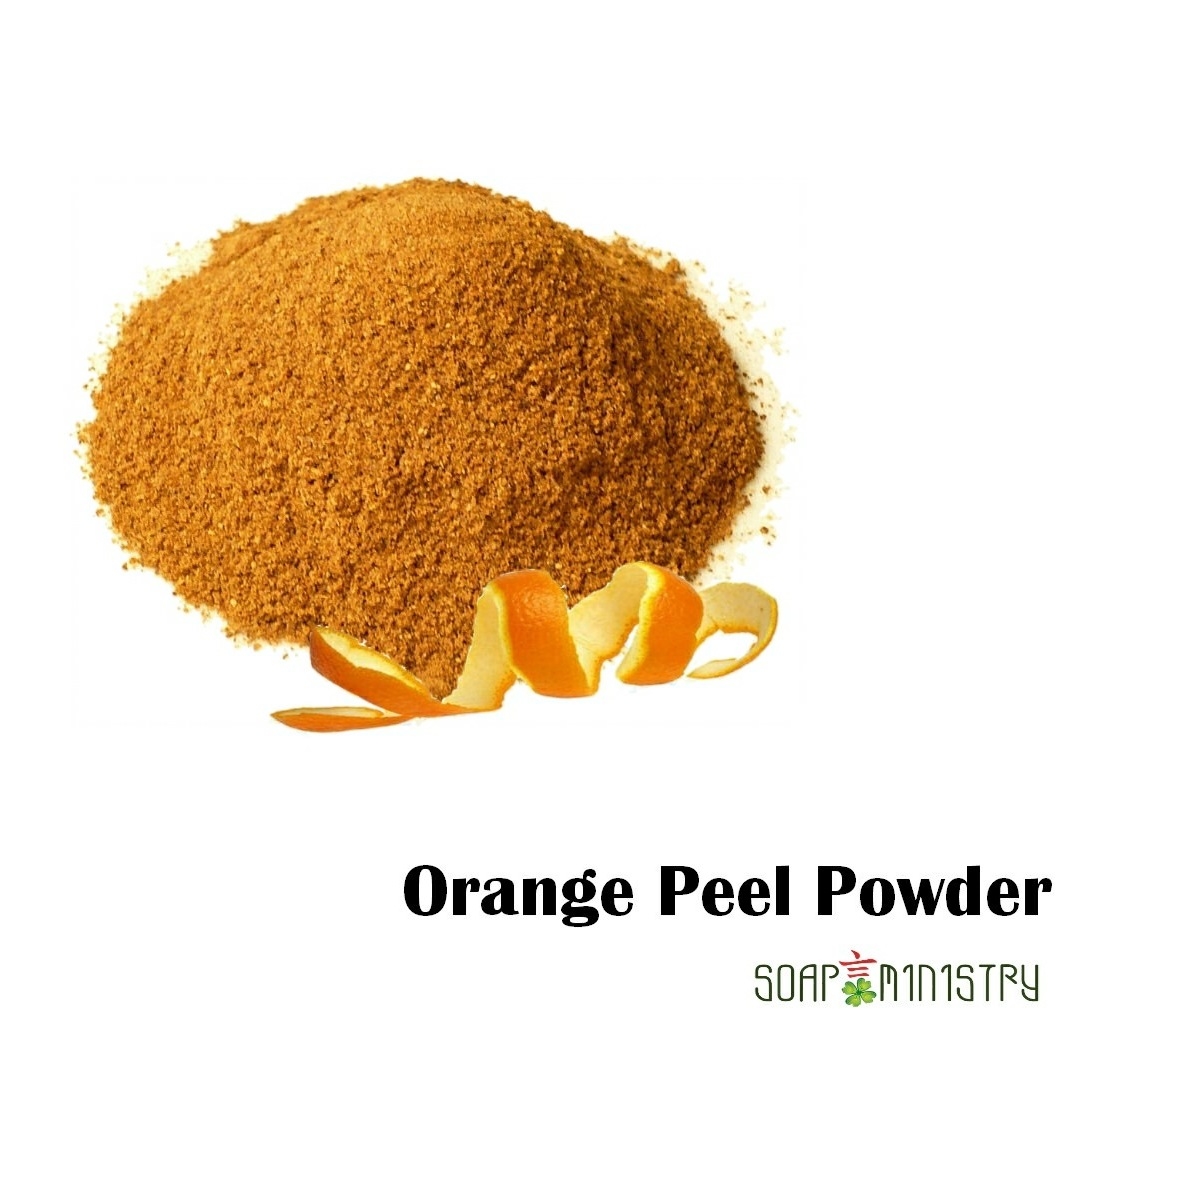 Orange Peel Powder 500g